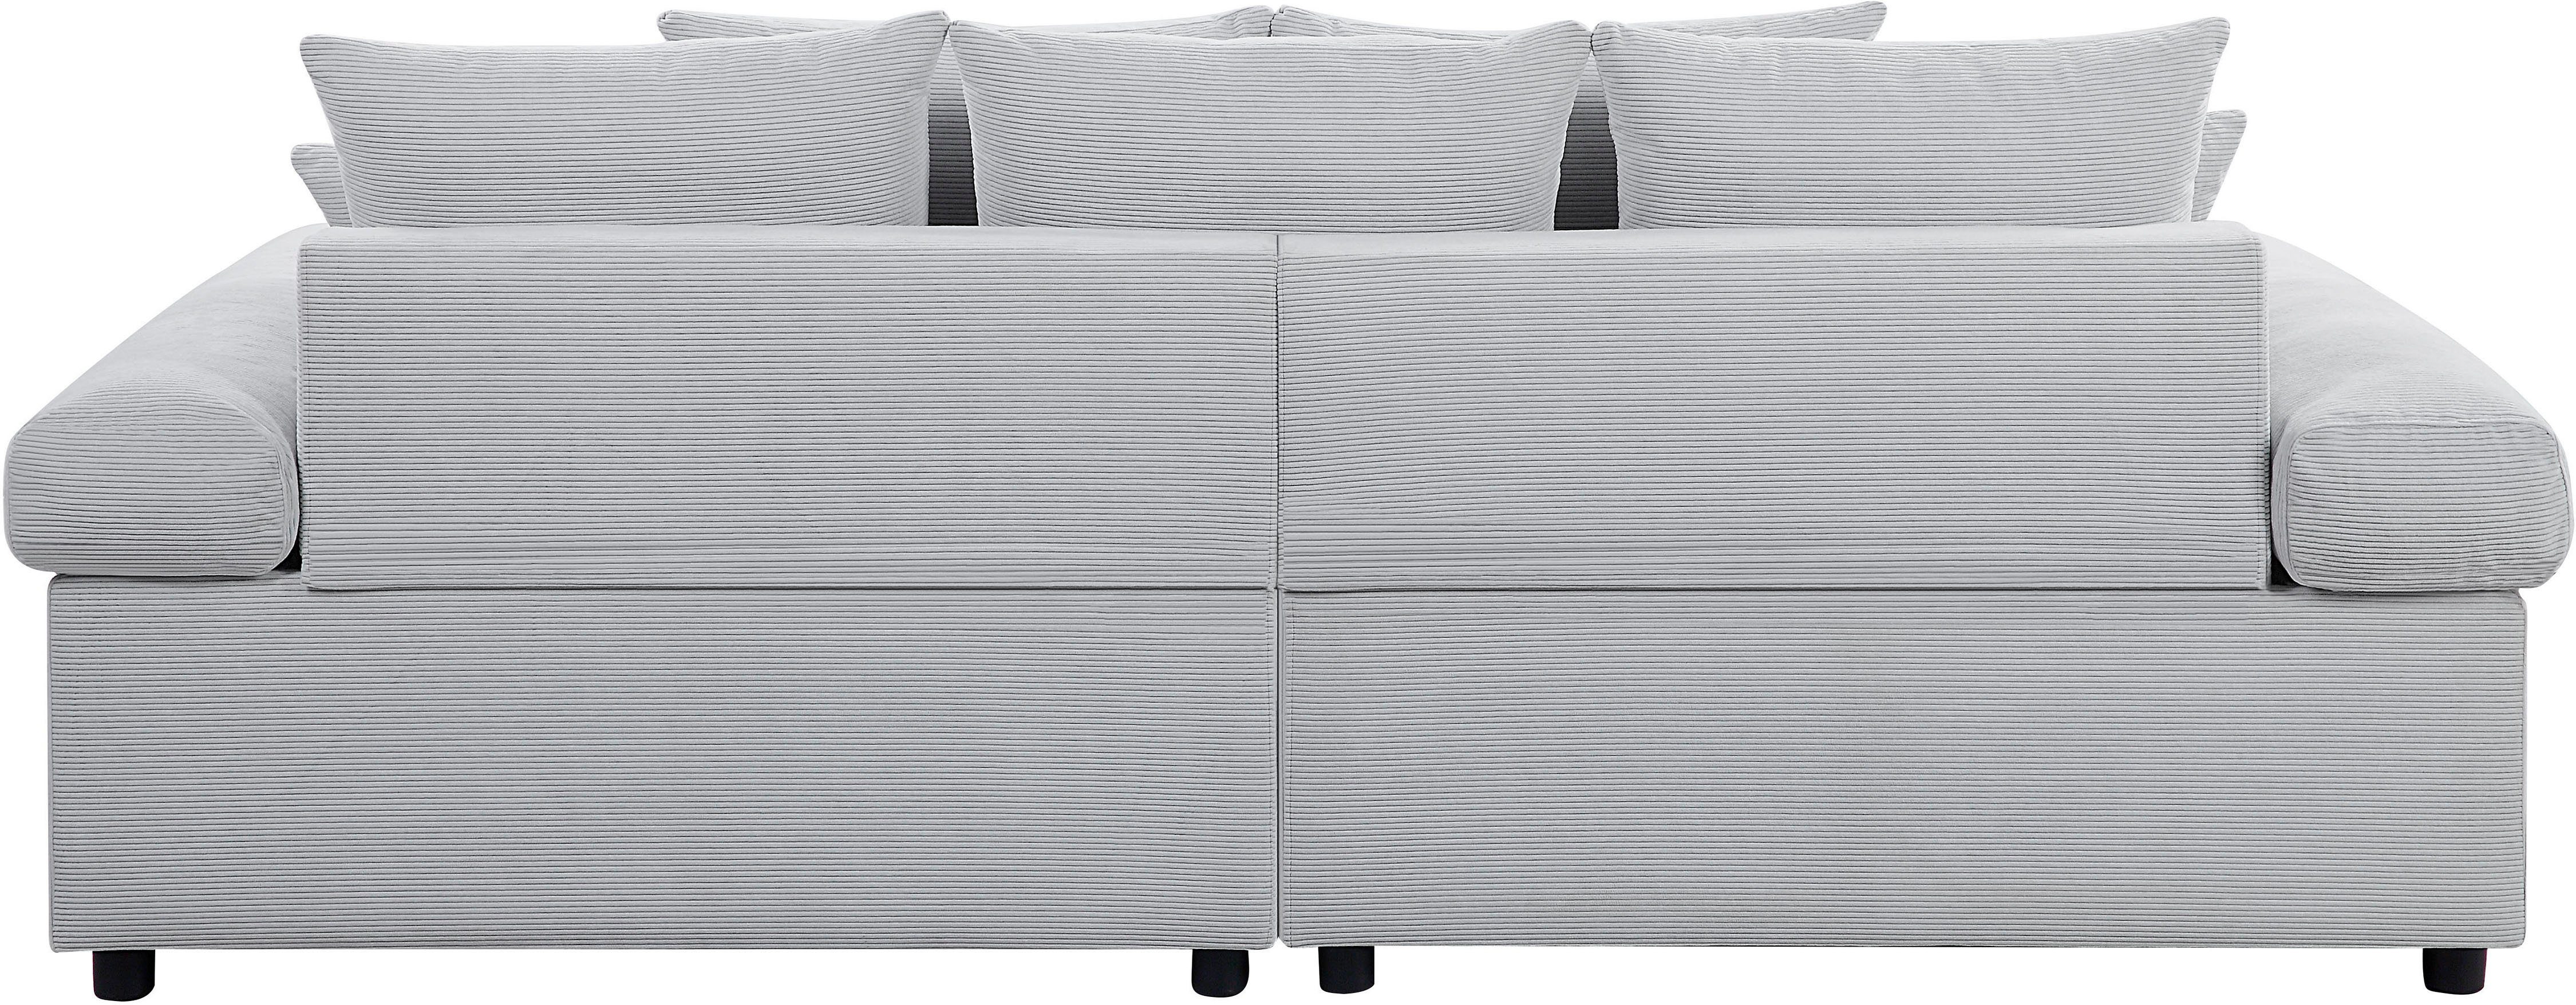 Federkern, Big-Sofa mit frei im stellbar Cord-Bezug, grau Bjoern, XXL-Sitzfläche, home mit Raum ATLANTIC collection